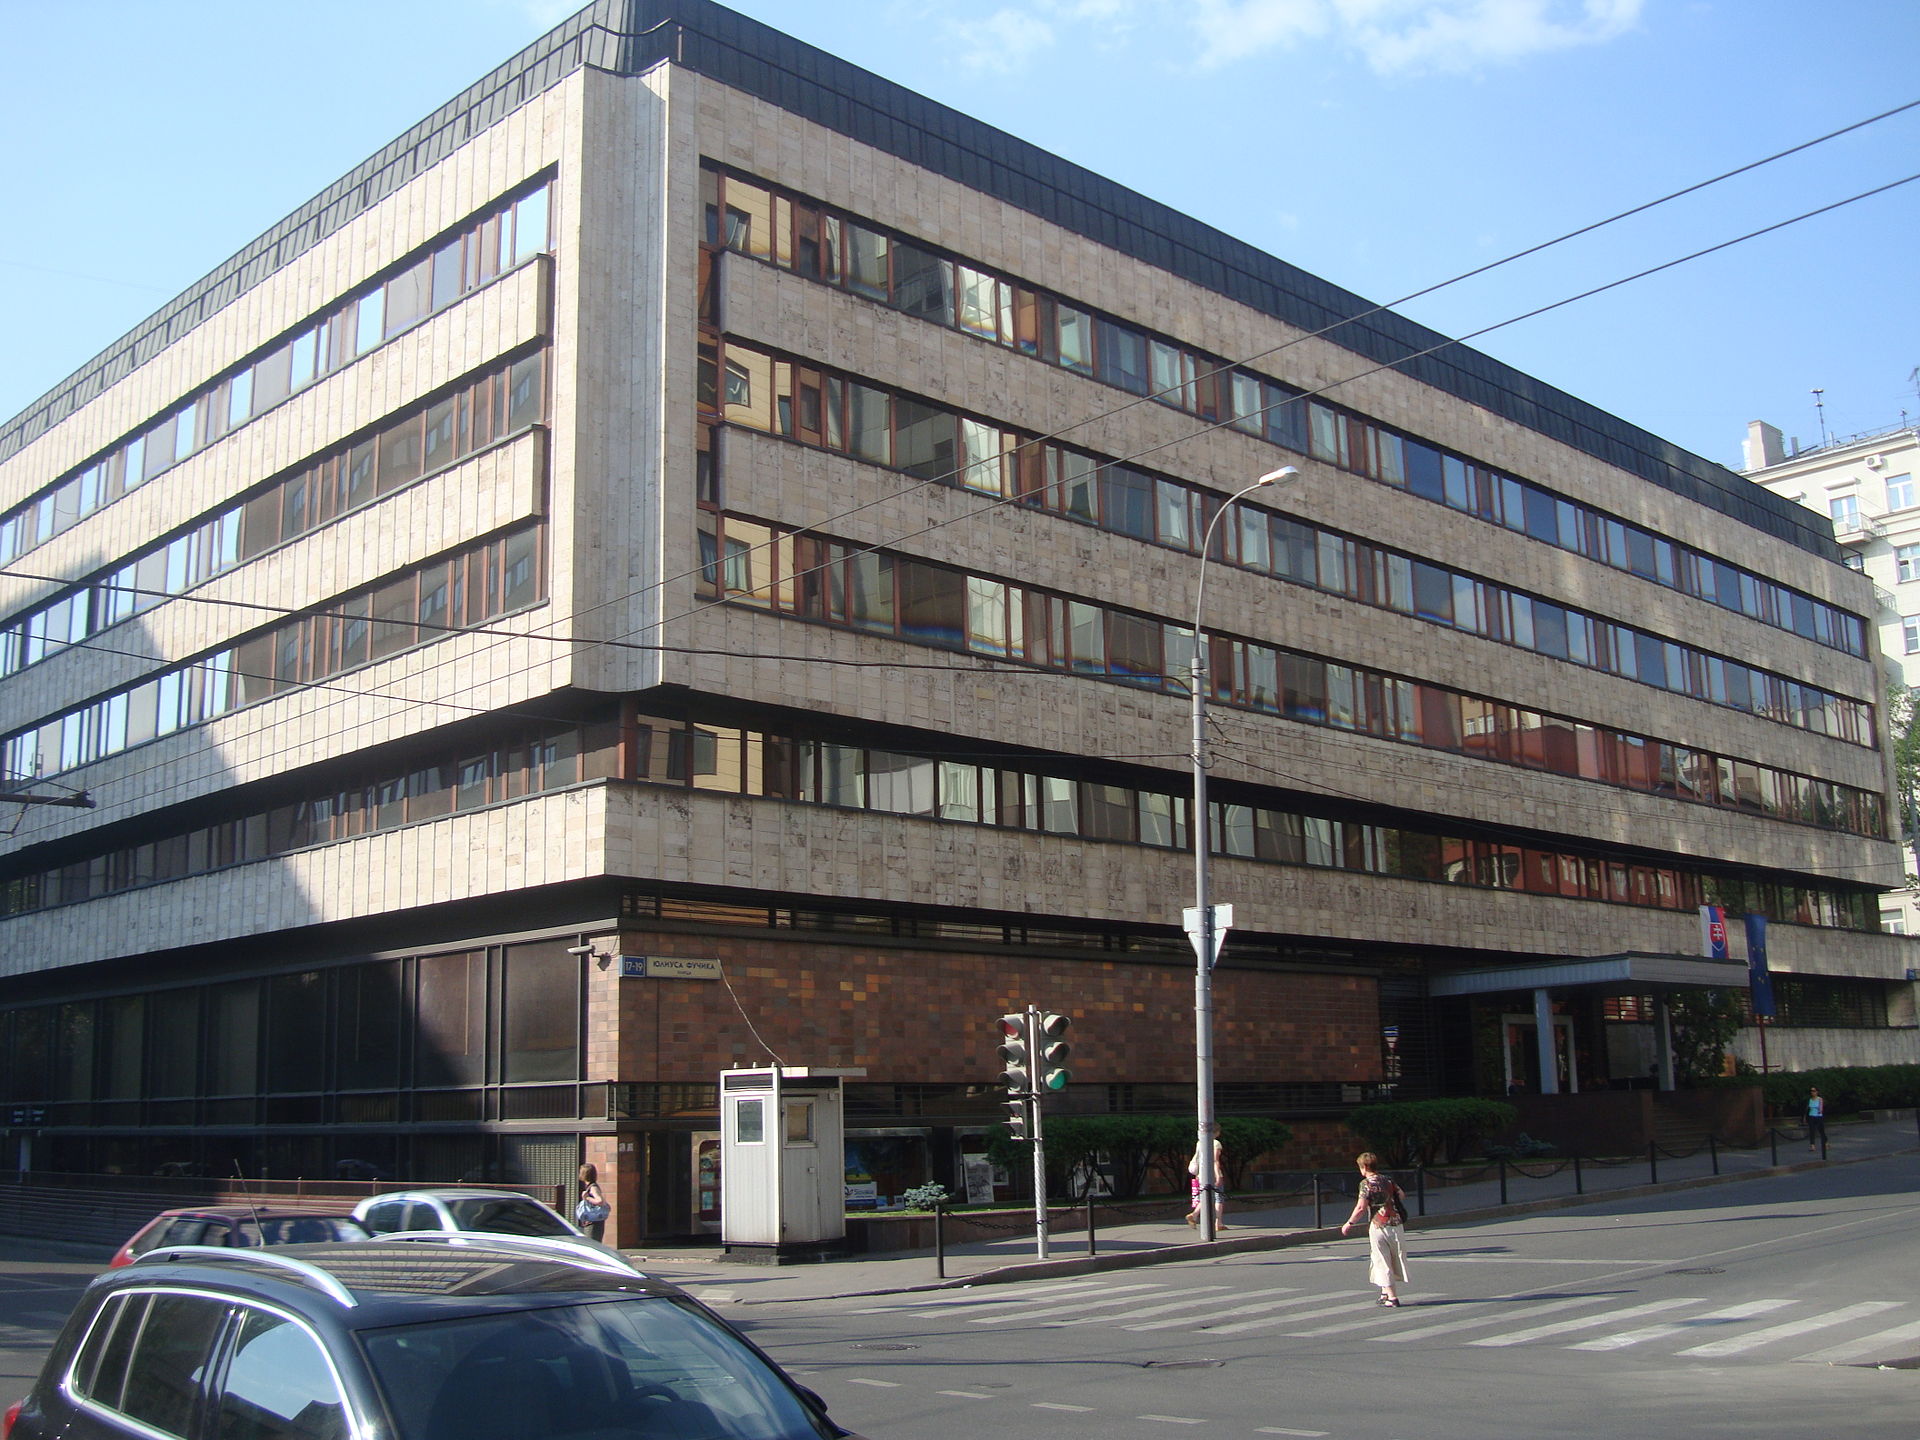 velvyslanectvo, diplomati, slovenský dom